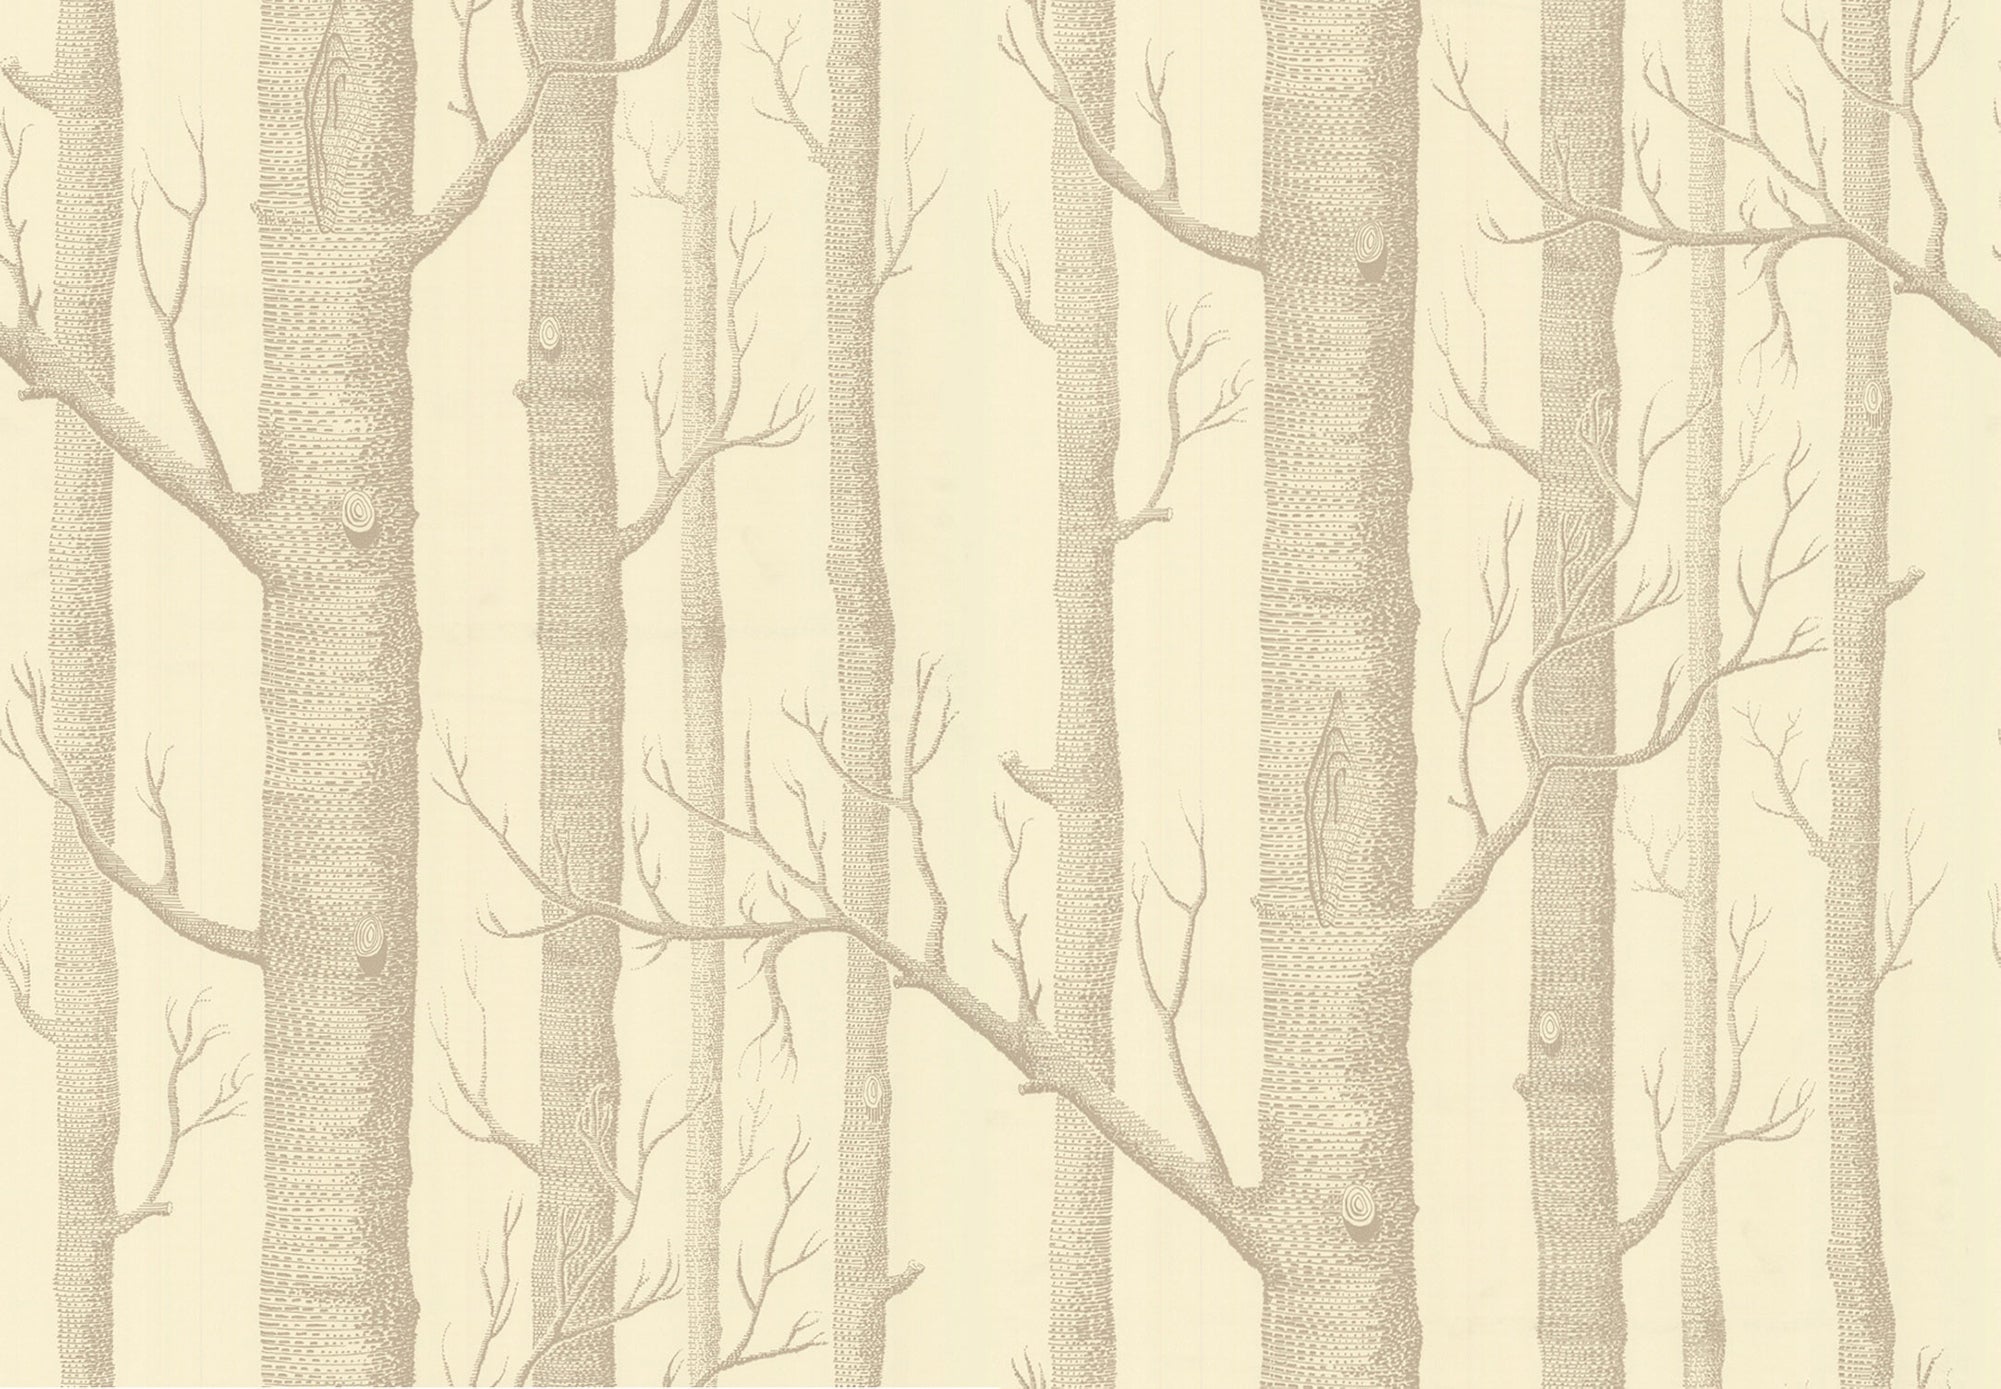 Woods - Linen on Cream